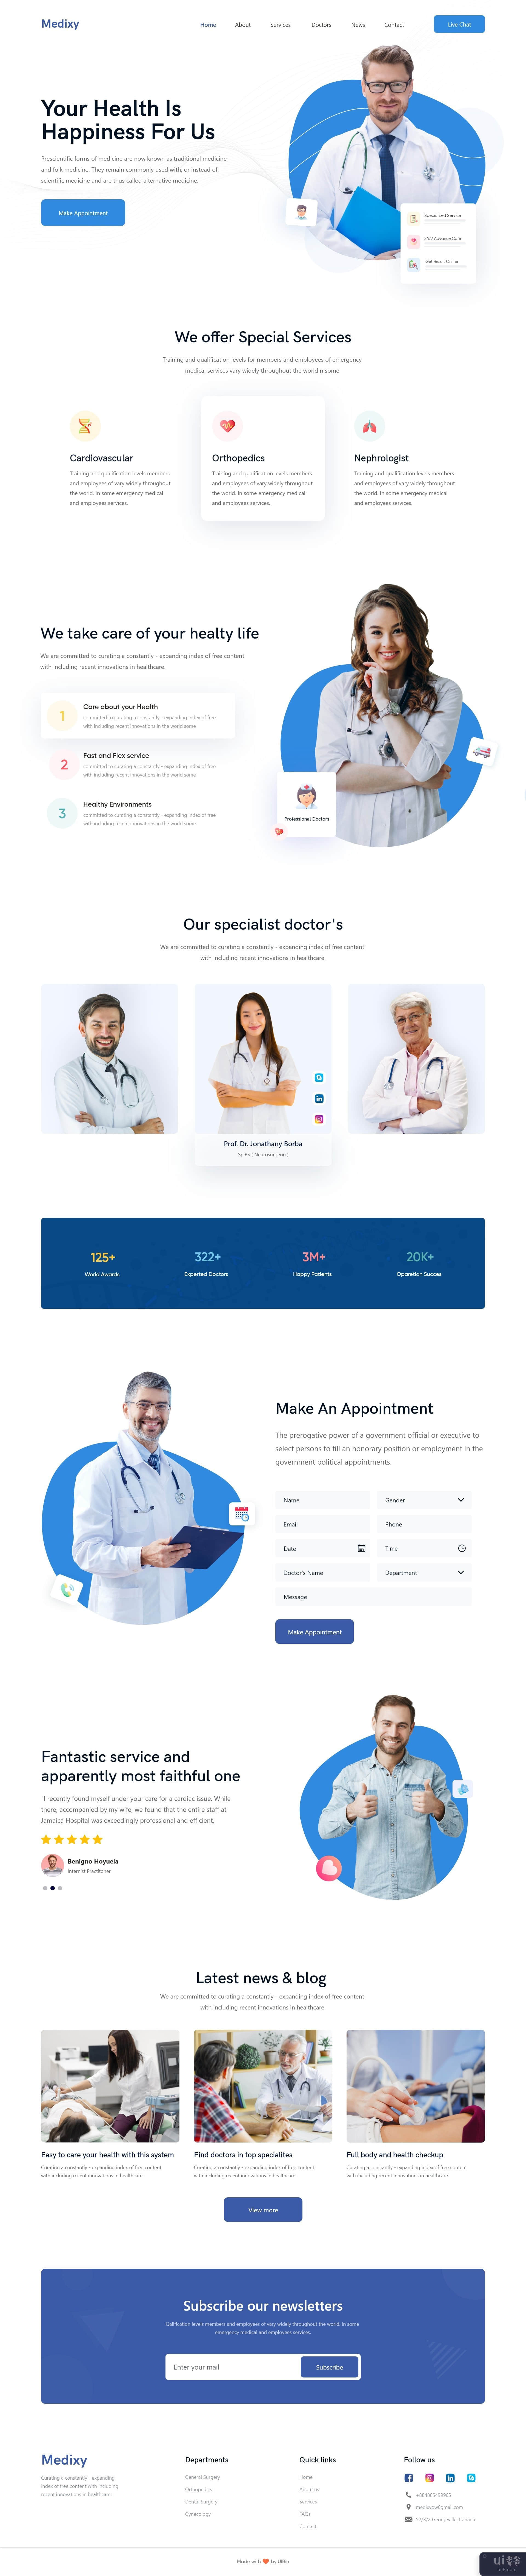 医疗 ||医疗顾问登陆页面概念(Medixy || Medical Consultant Landing page concept)插图